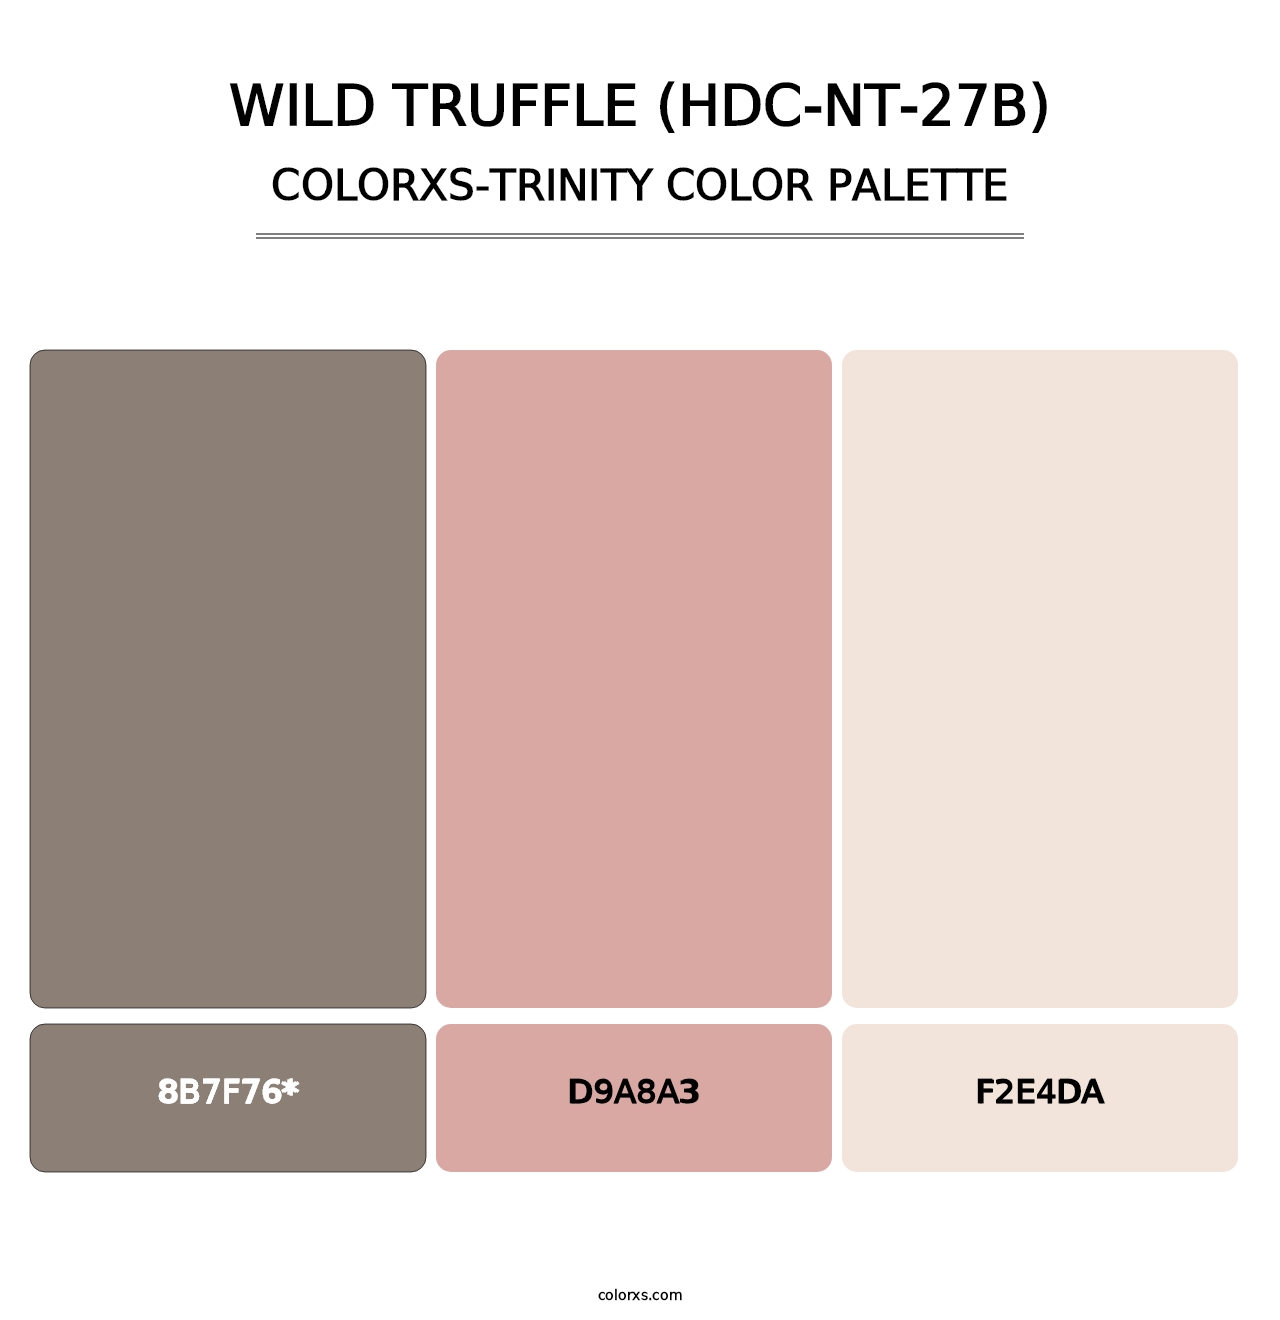 Wild Truffle (HDC-NT-27B) - Colorxs Trinity Palette